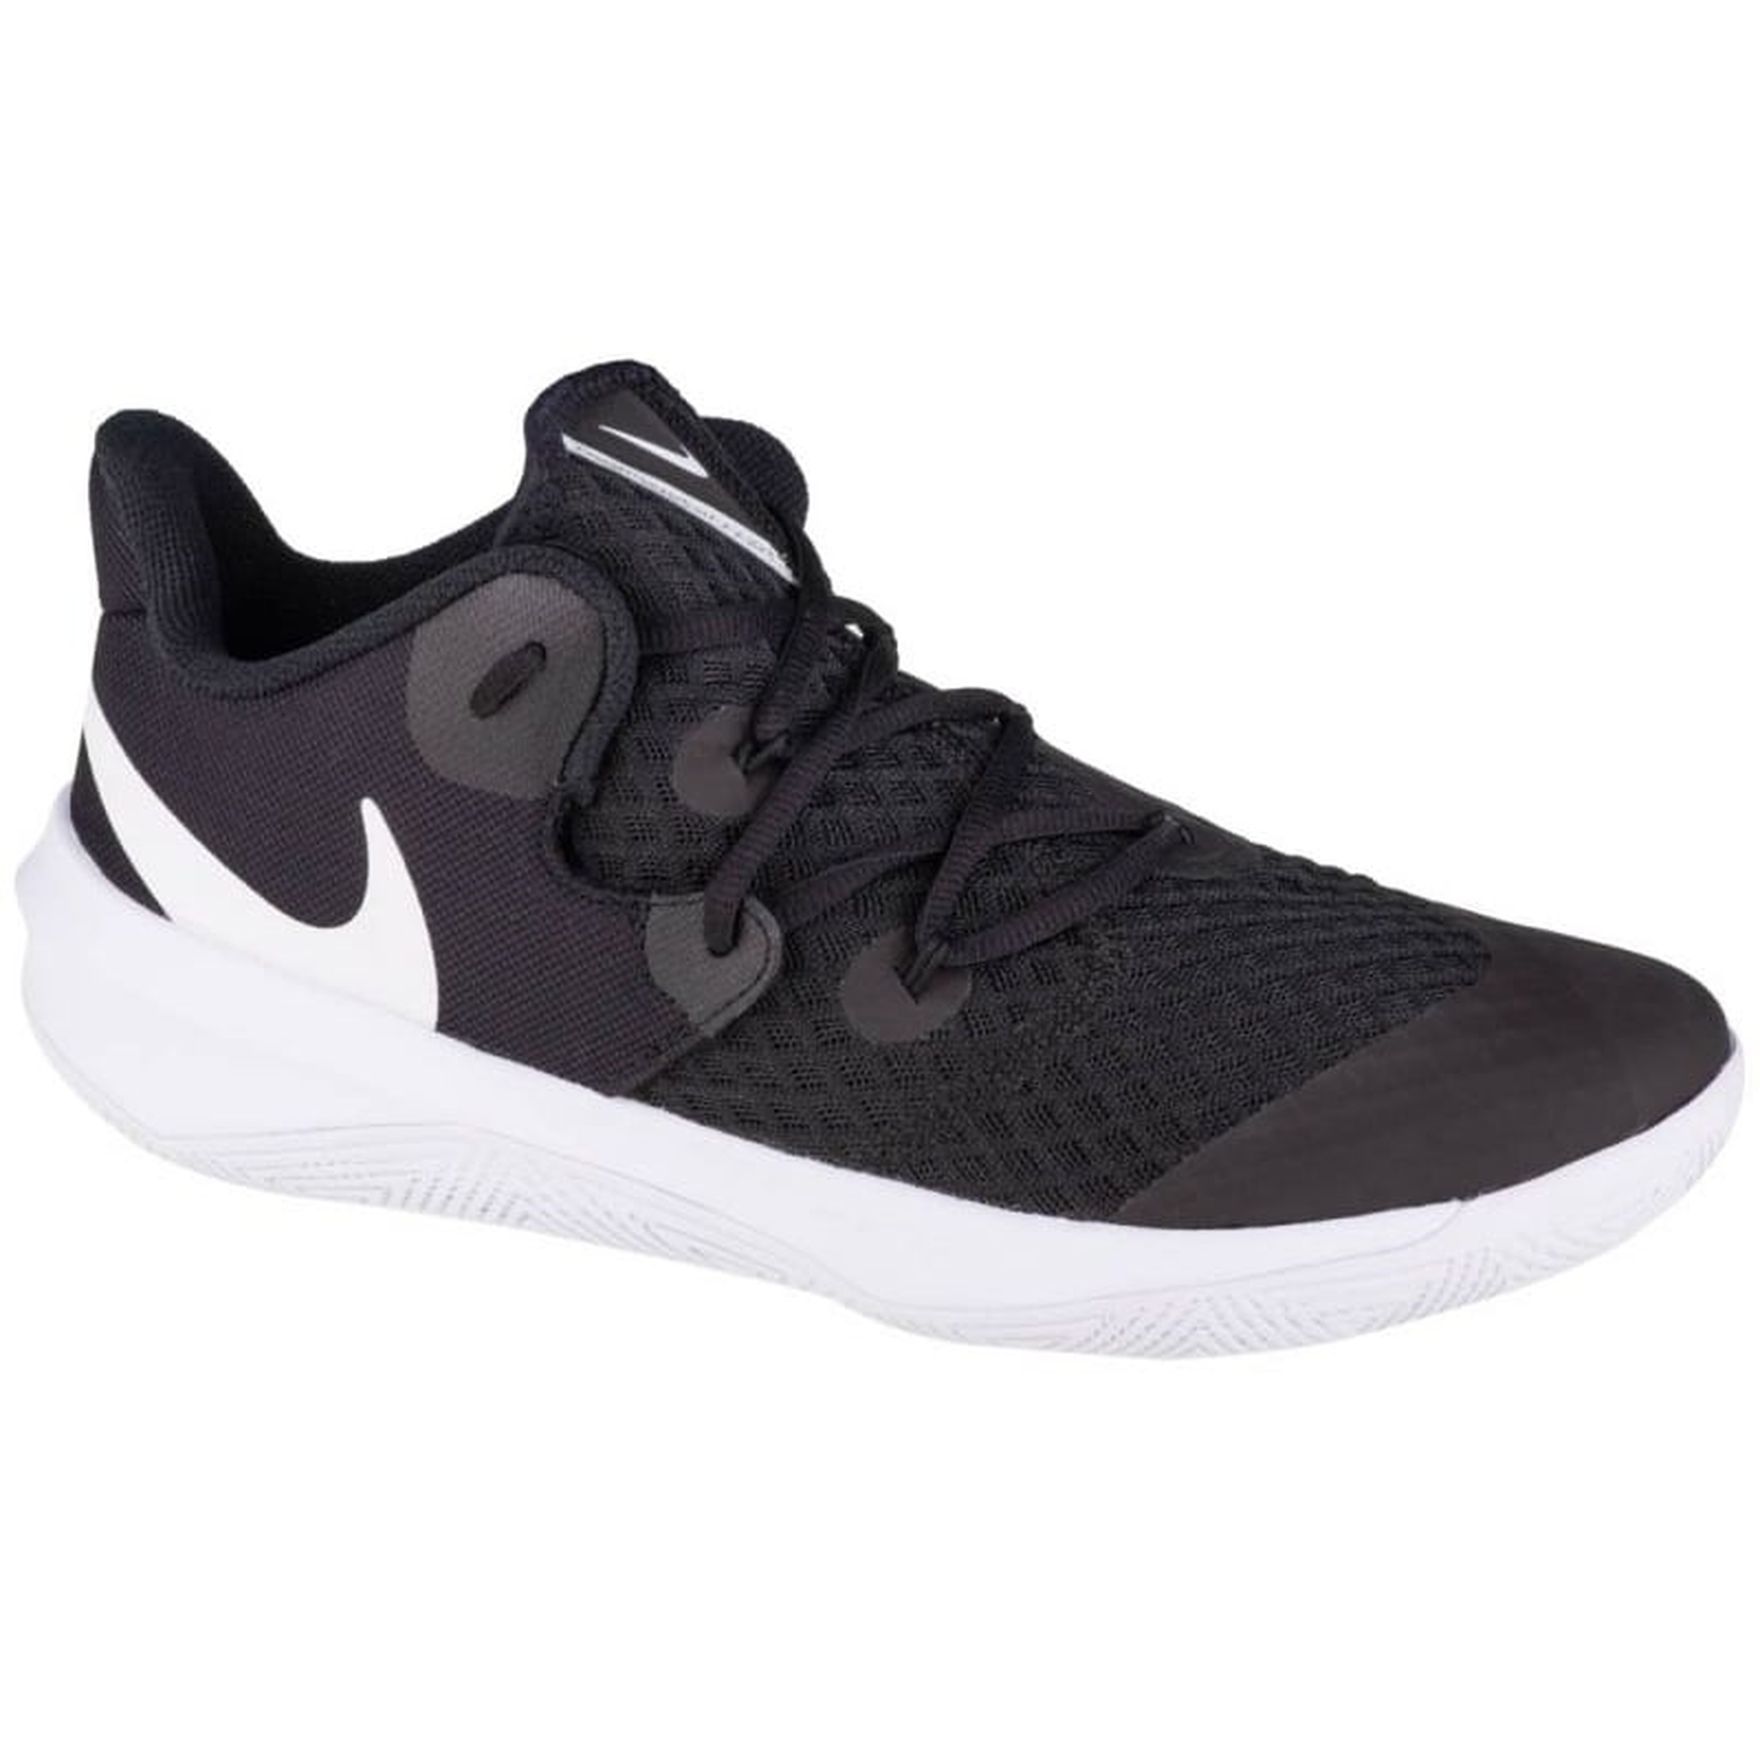 Buty Nike Zoom Hyperspeed Court M CI2964-010 białe czarne